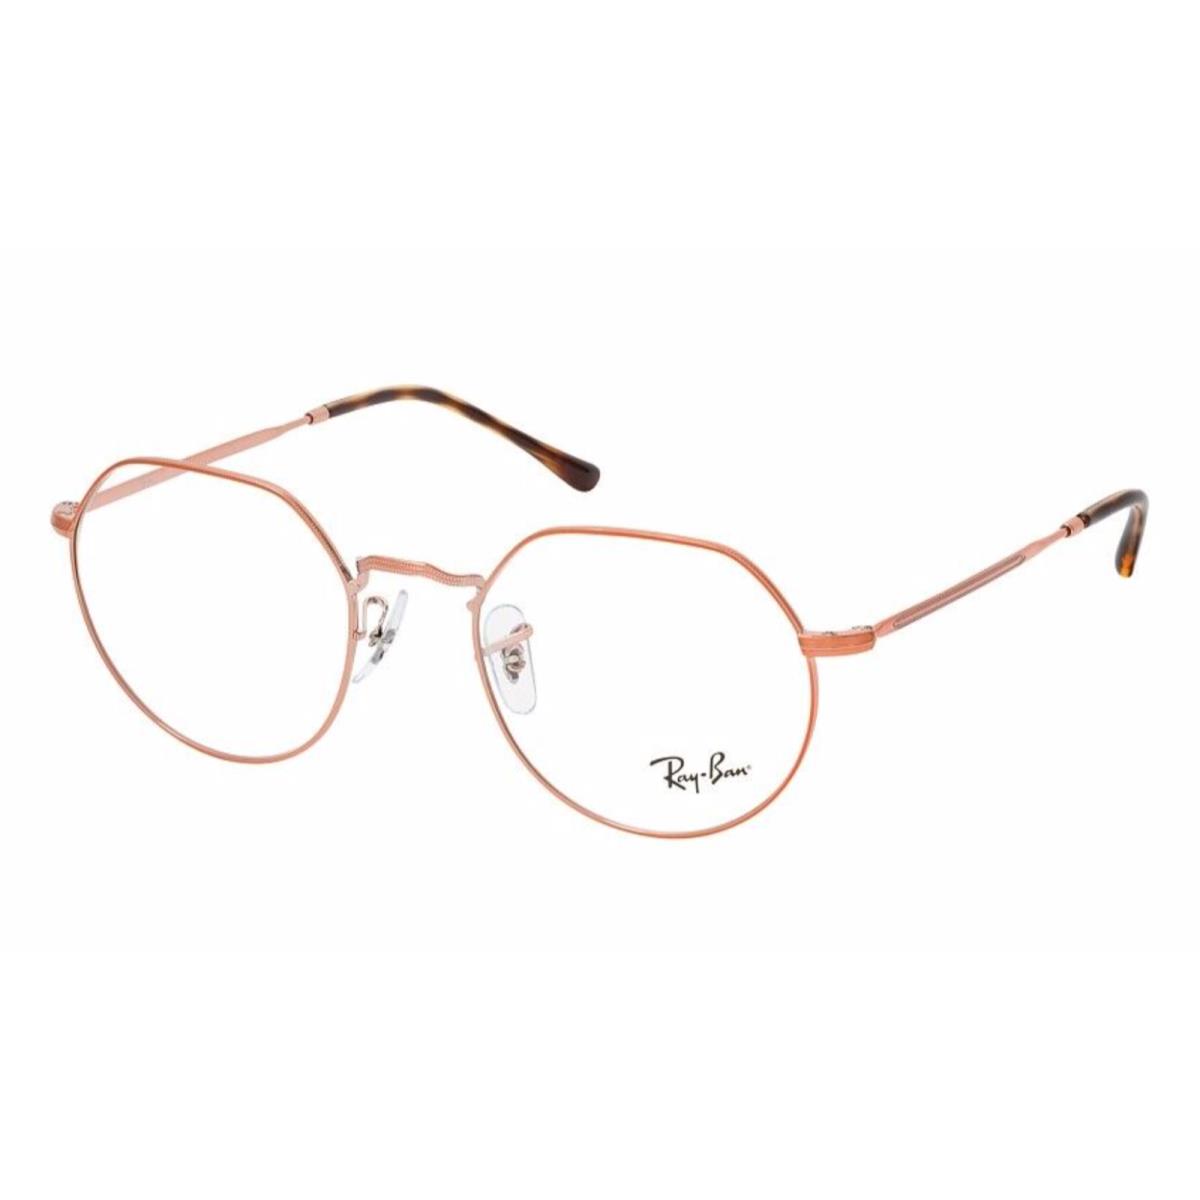 Ray-ban Eyeglasses RB 6465 Jack 2943 51-20 140 Copper Light Brown Frames